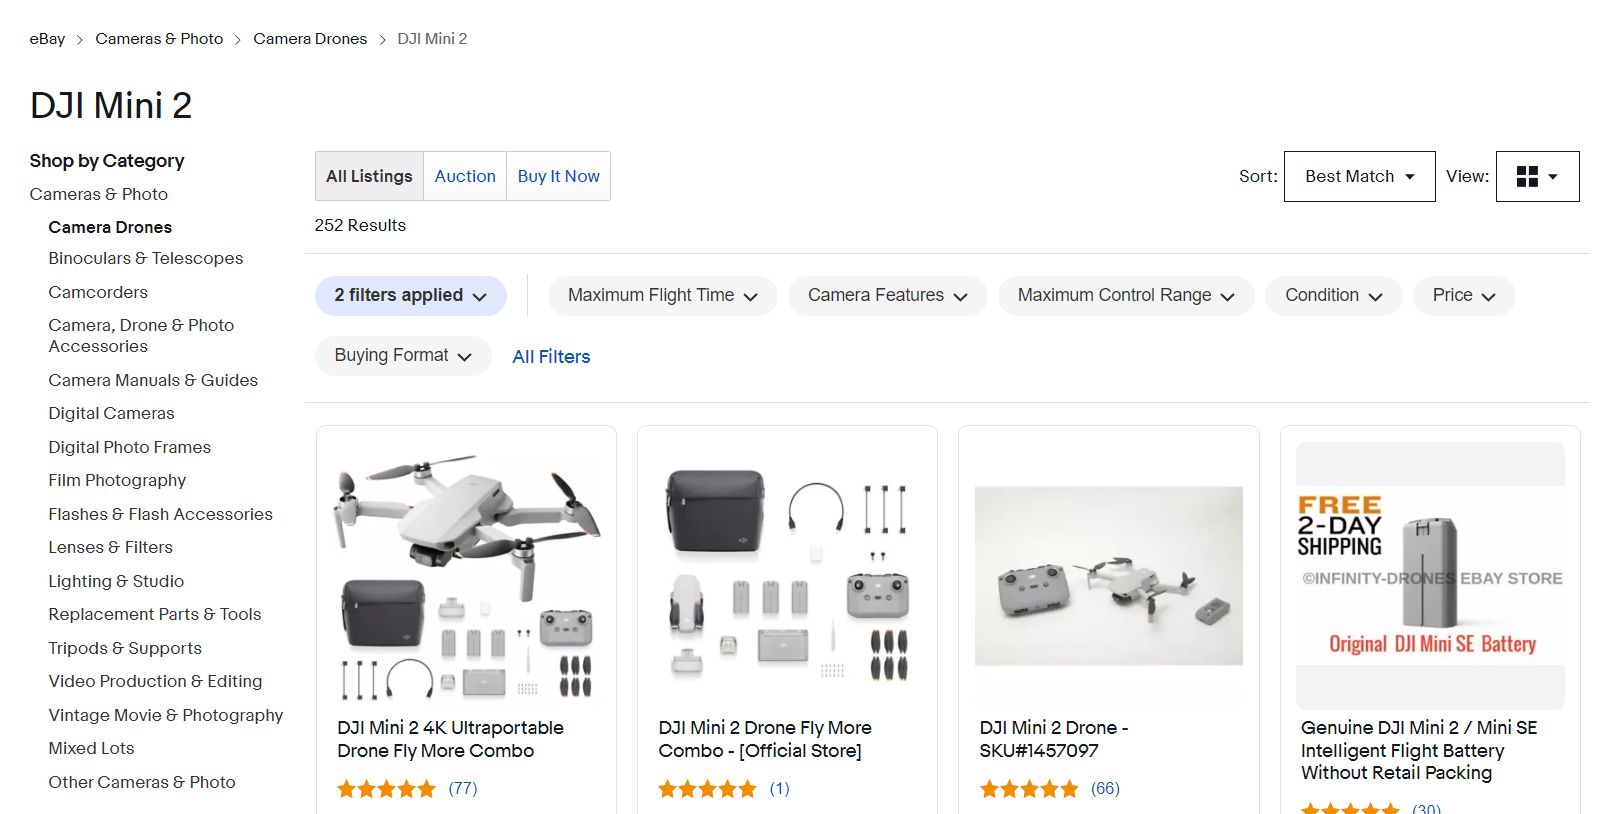 screenshot of DJI Mini 2 product page on eBay